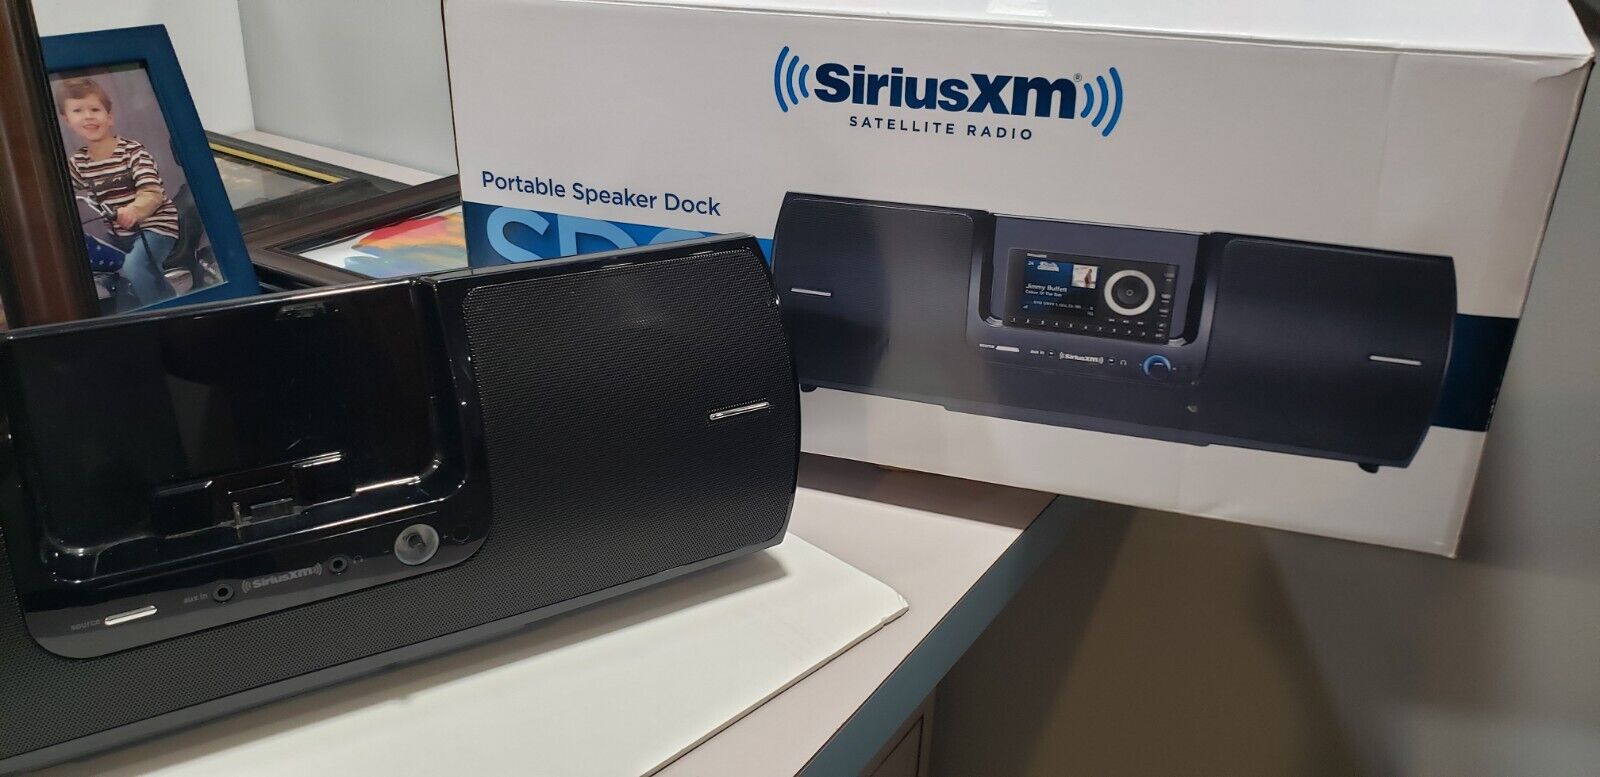 SiriusXM Portable Speaker Dock Kit SD2 With Remote, Antenna, And Original Box